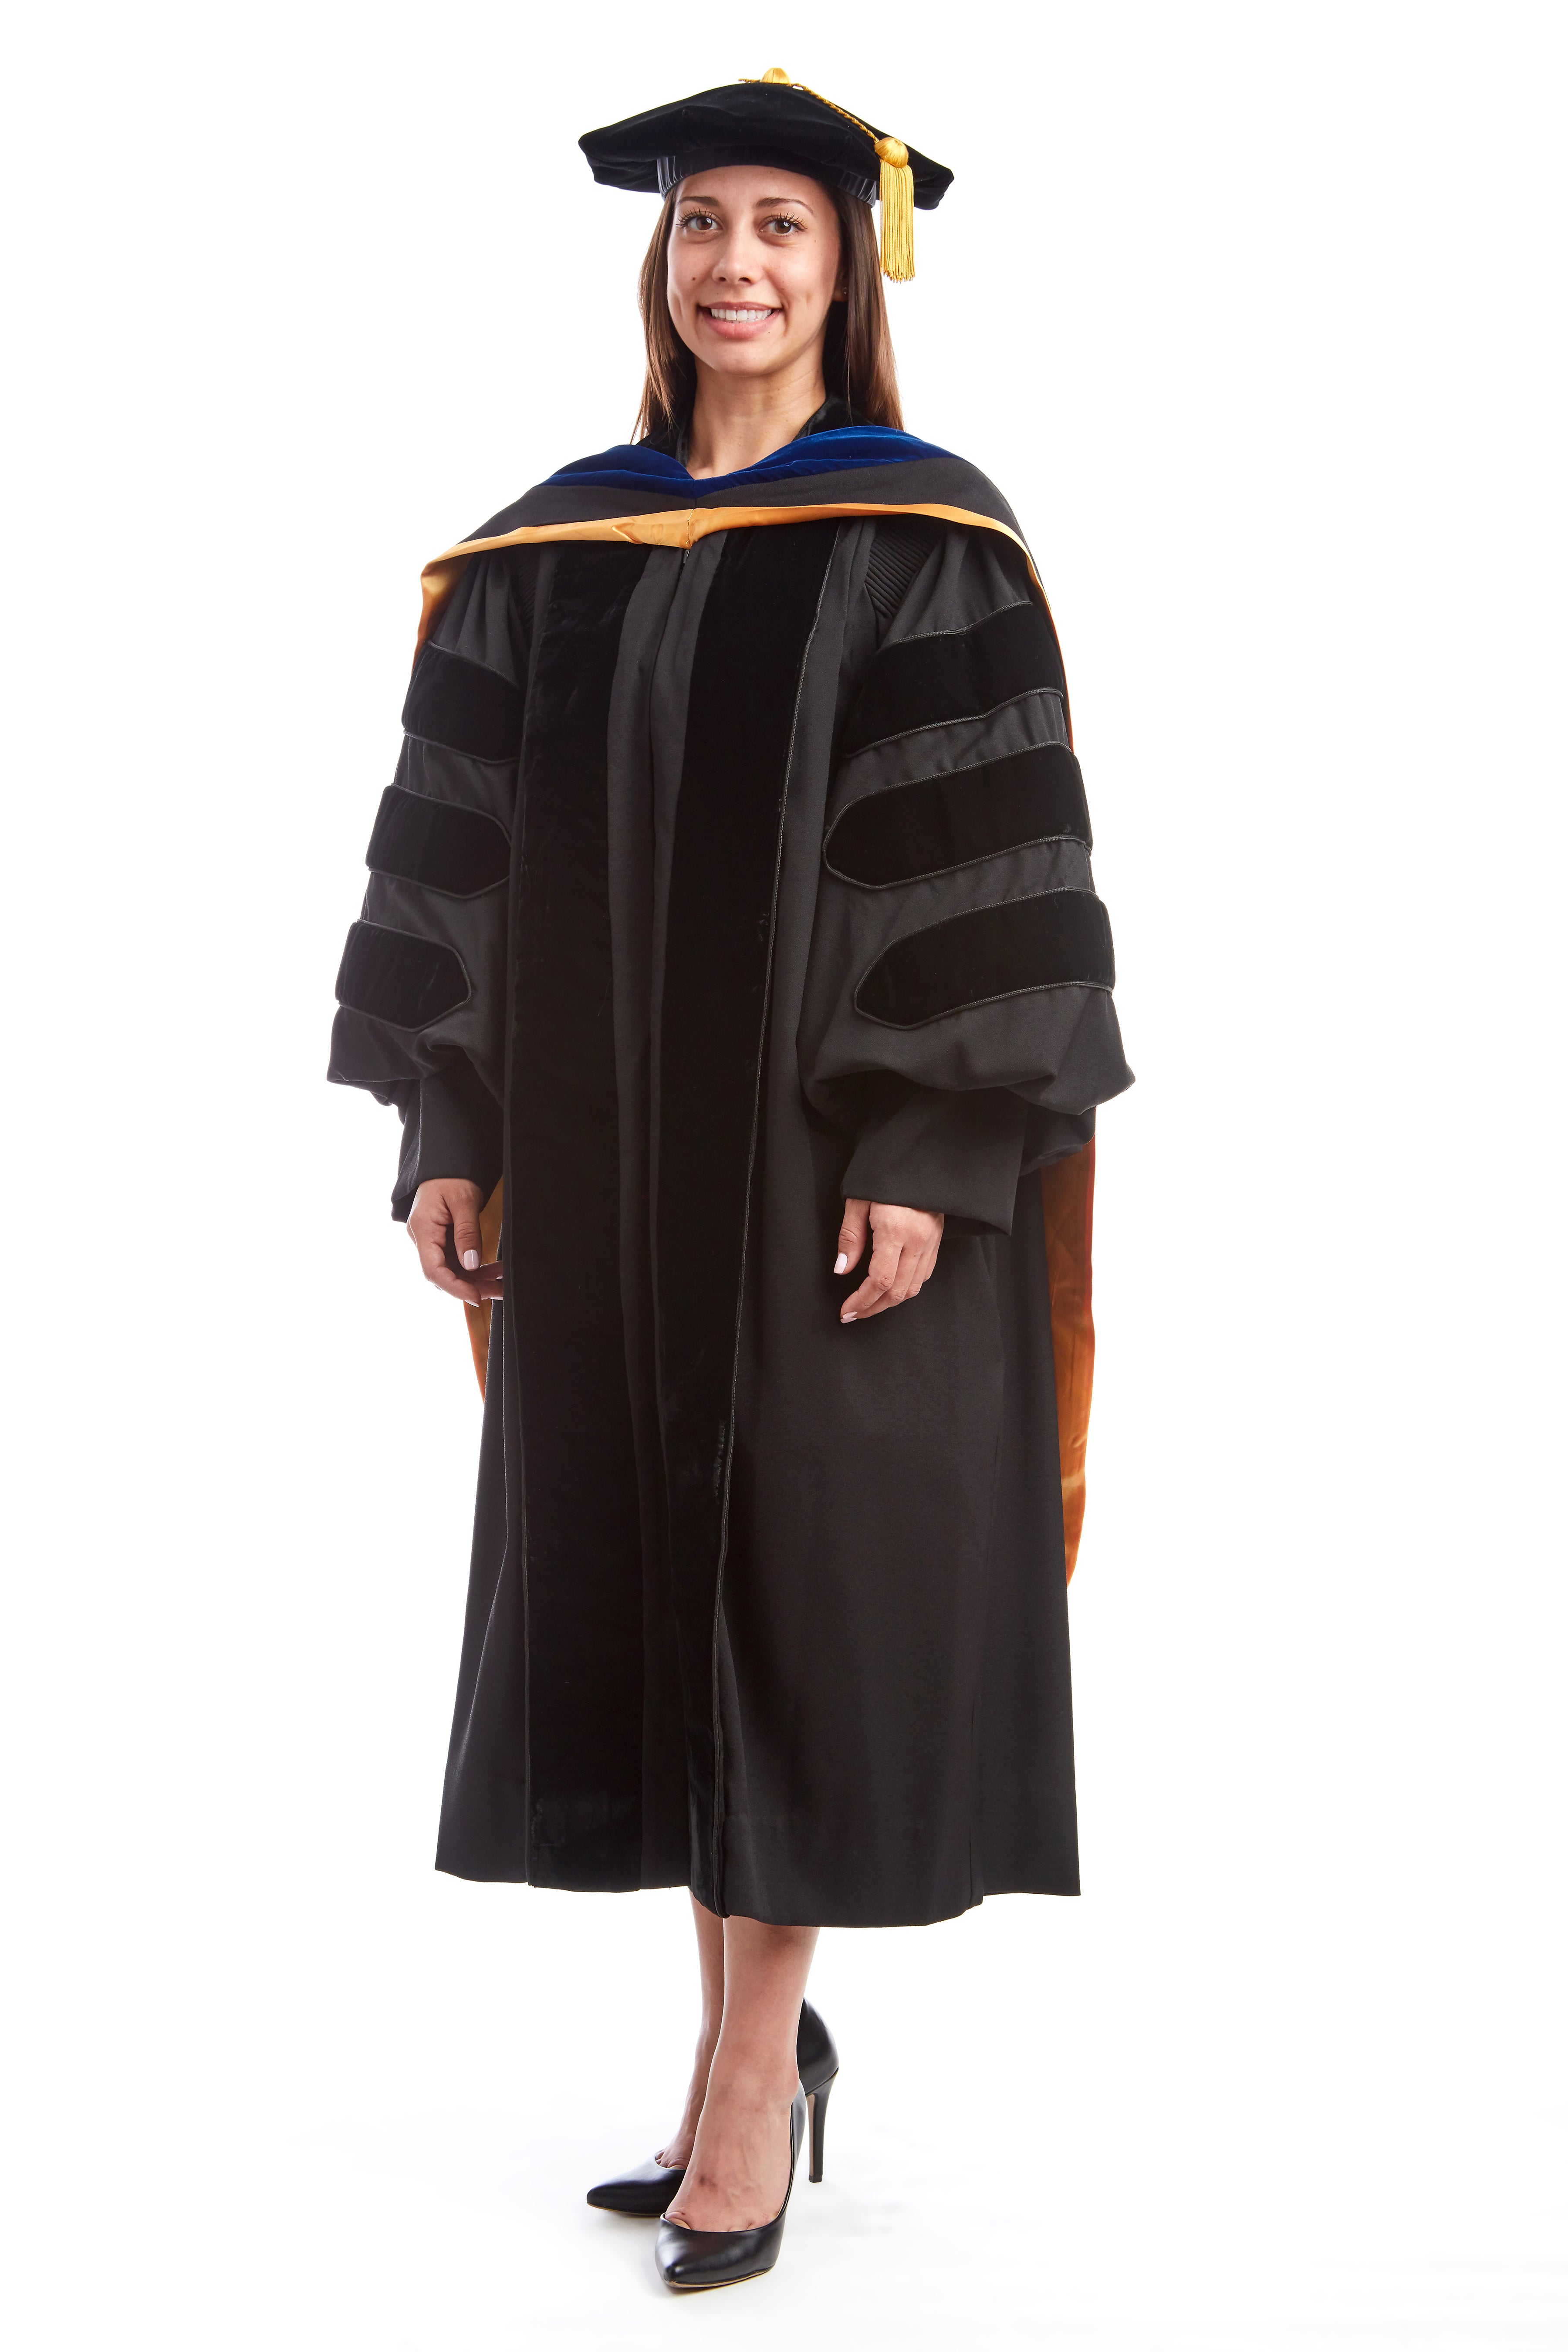 Premium Doctoral Gown, 8-sided Cap / Tam, & PhD Hood Regalia Set